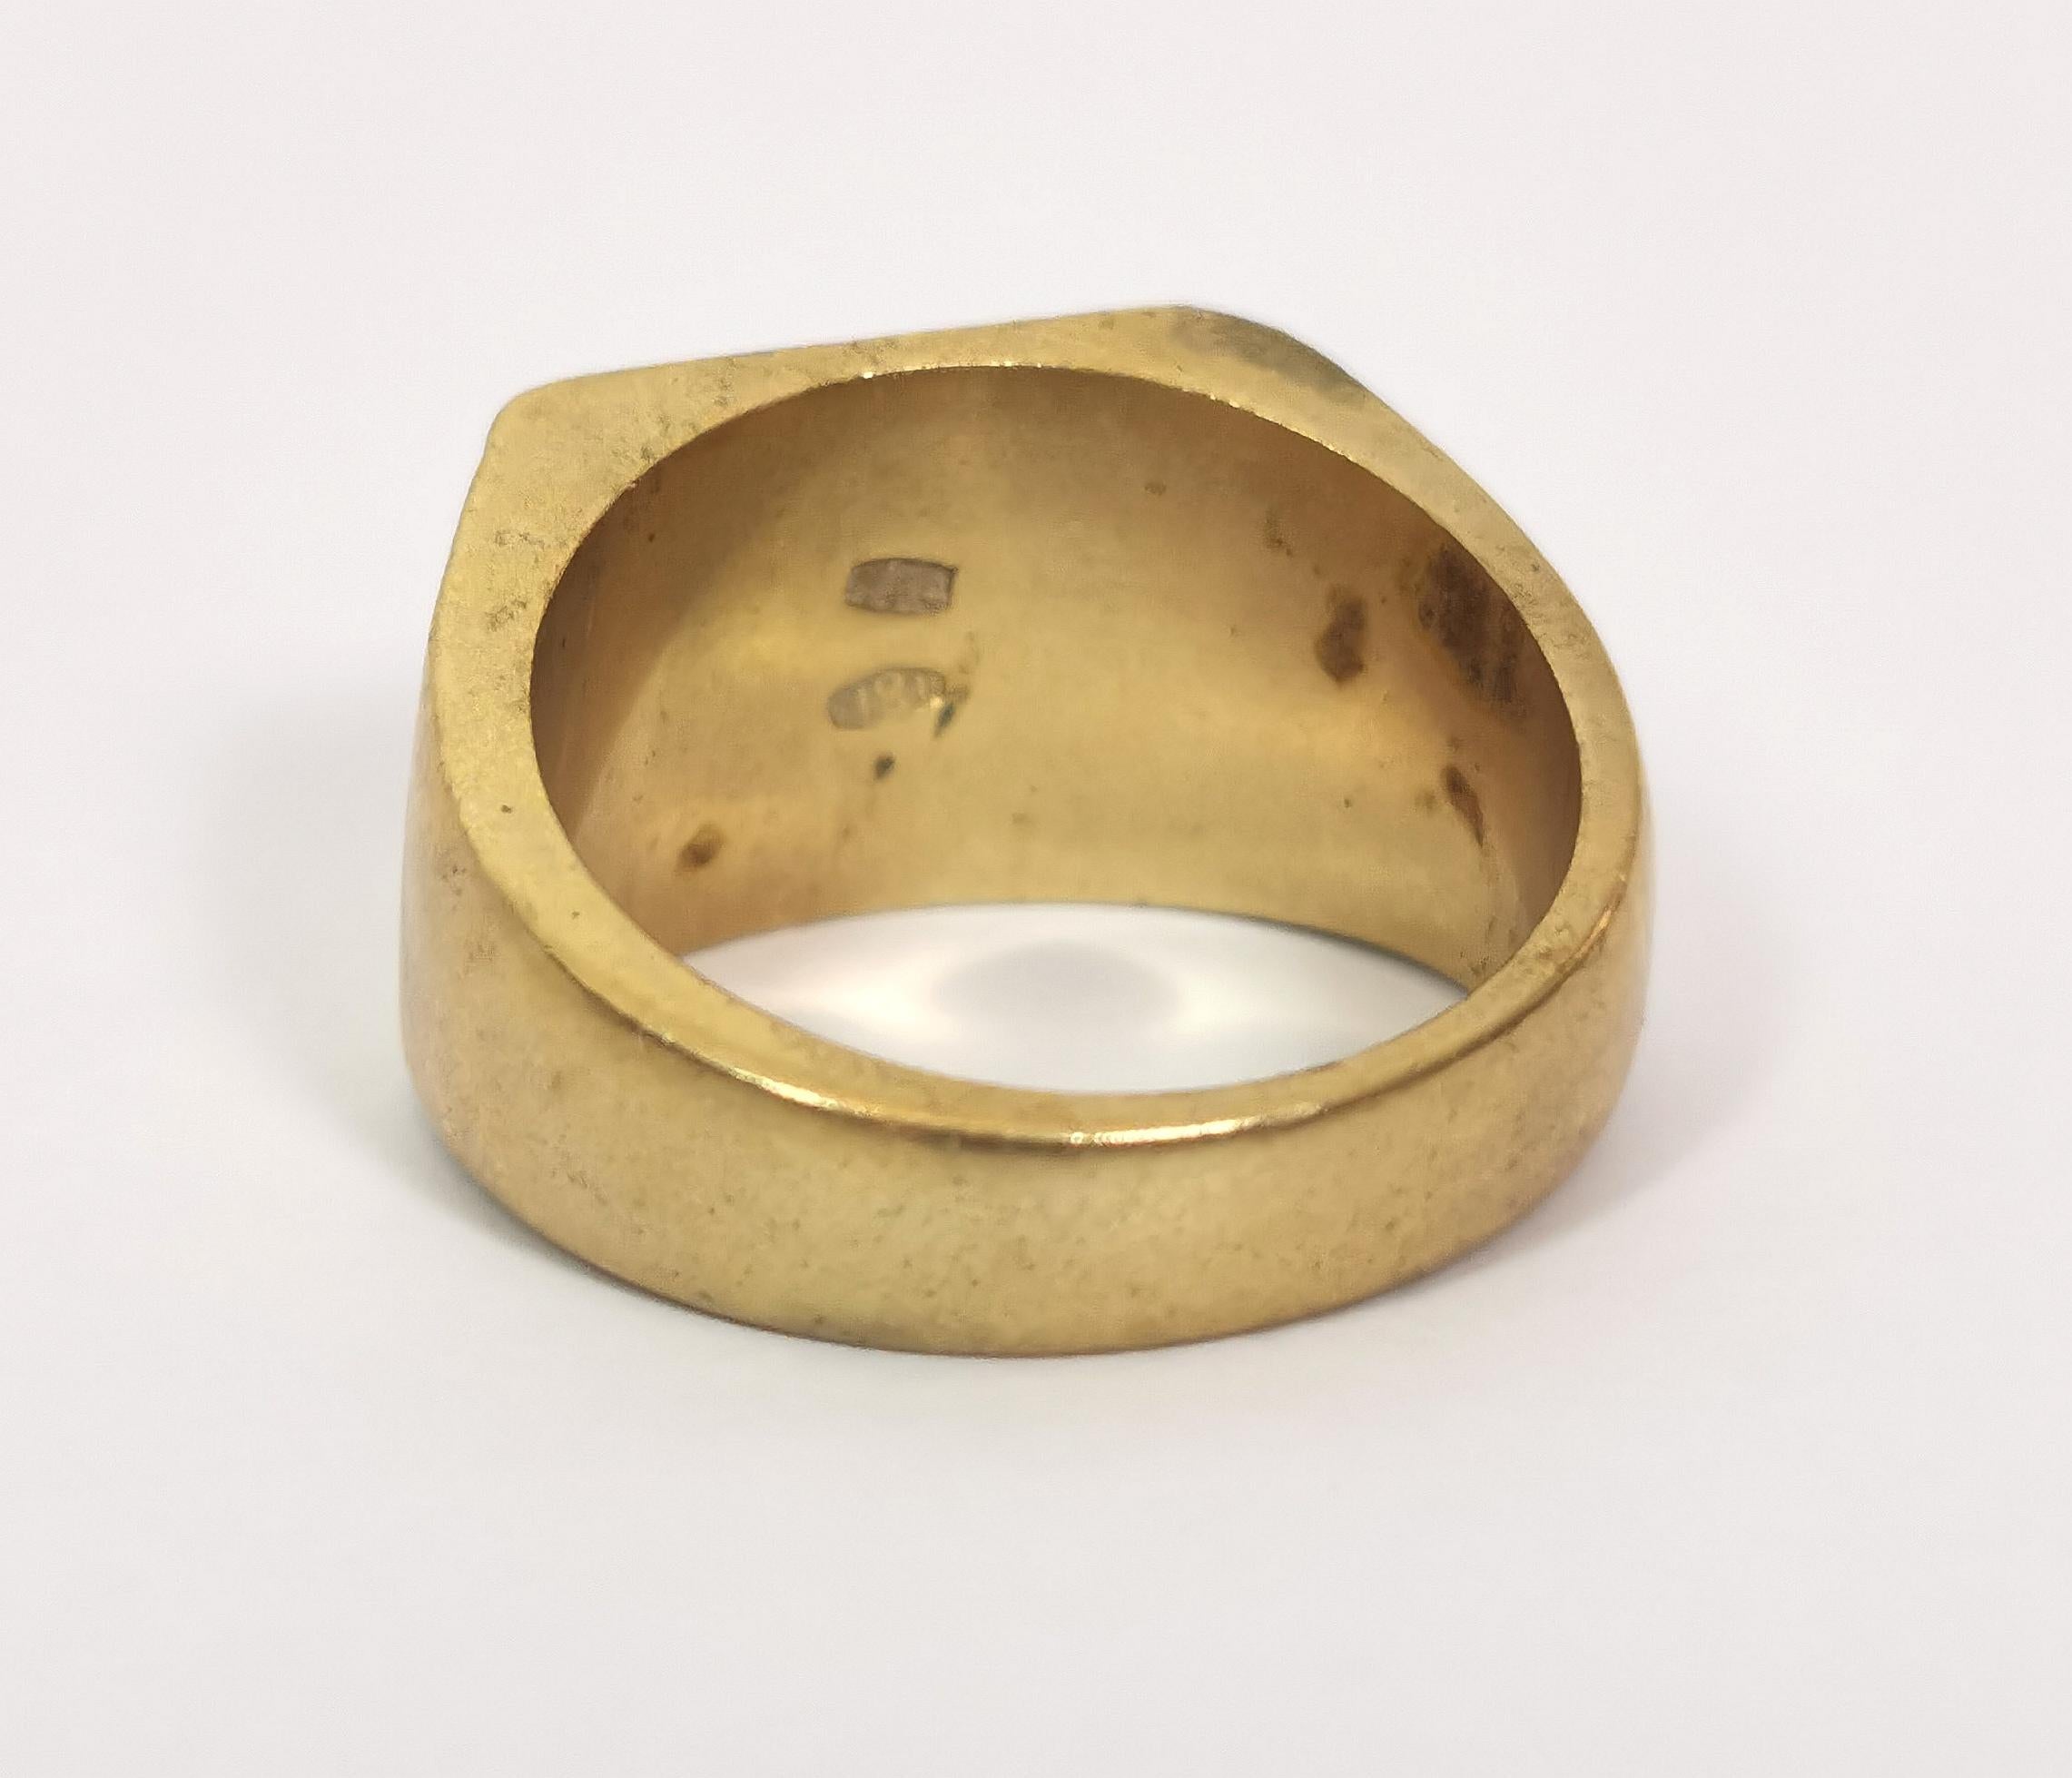 Vintage 18k gold plated signet ring, c1970s 2